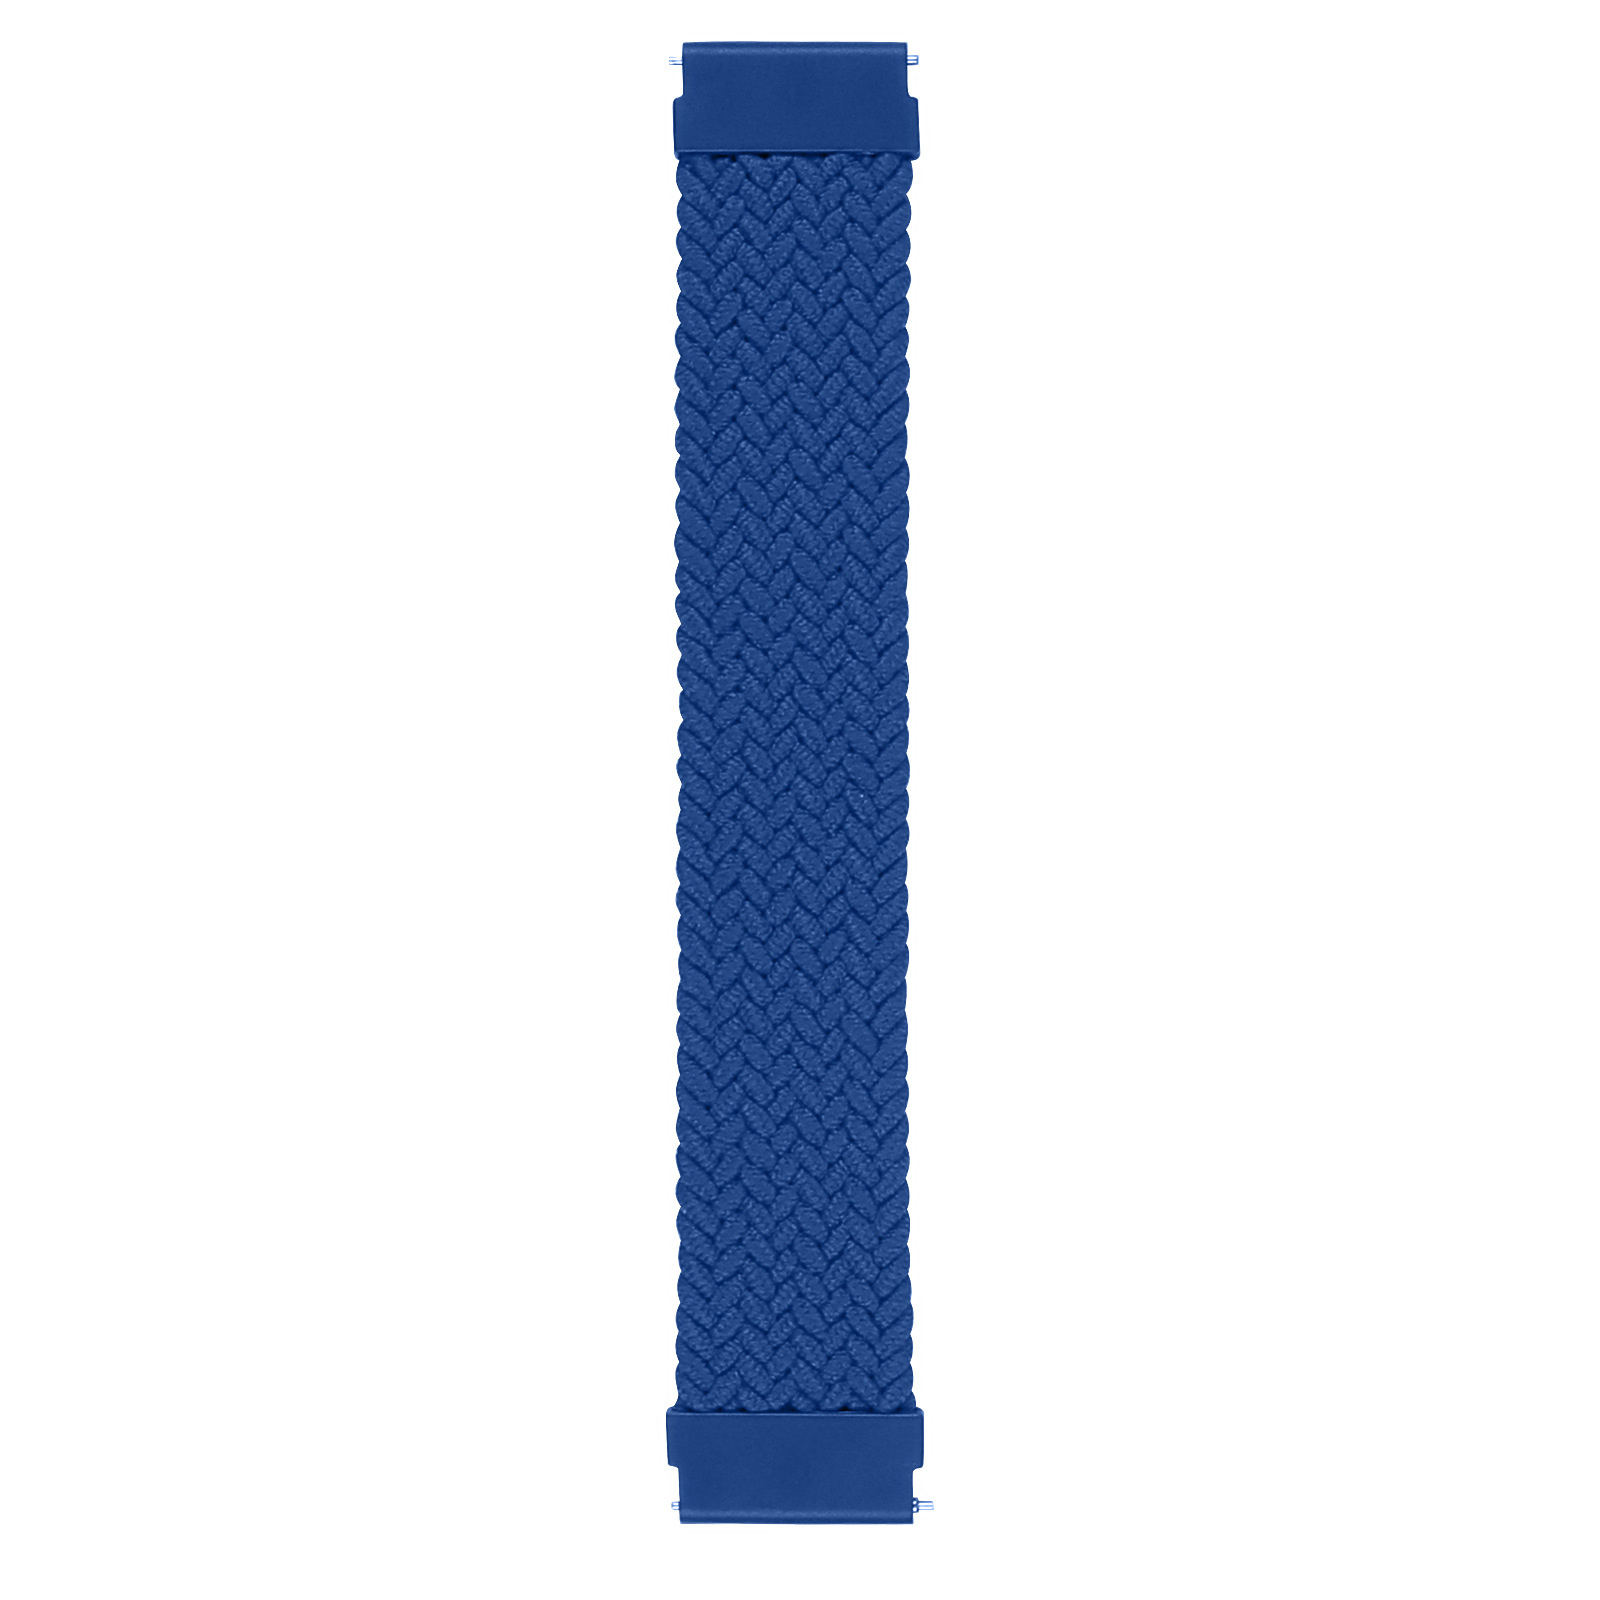 Samsung Galaxy Watch Nylon Geflochtenes Solo Loop - atlantikblau